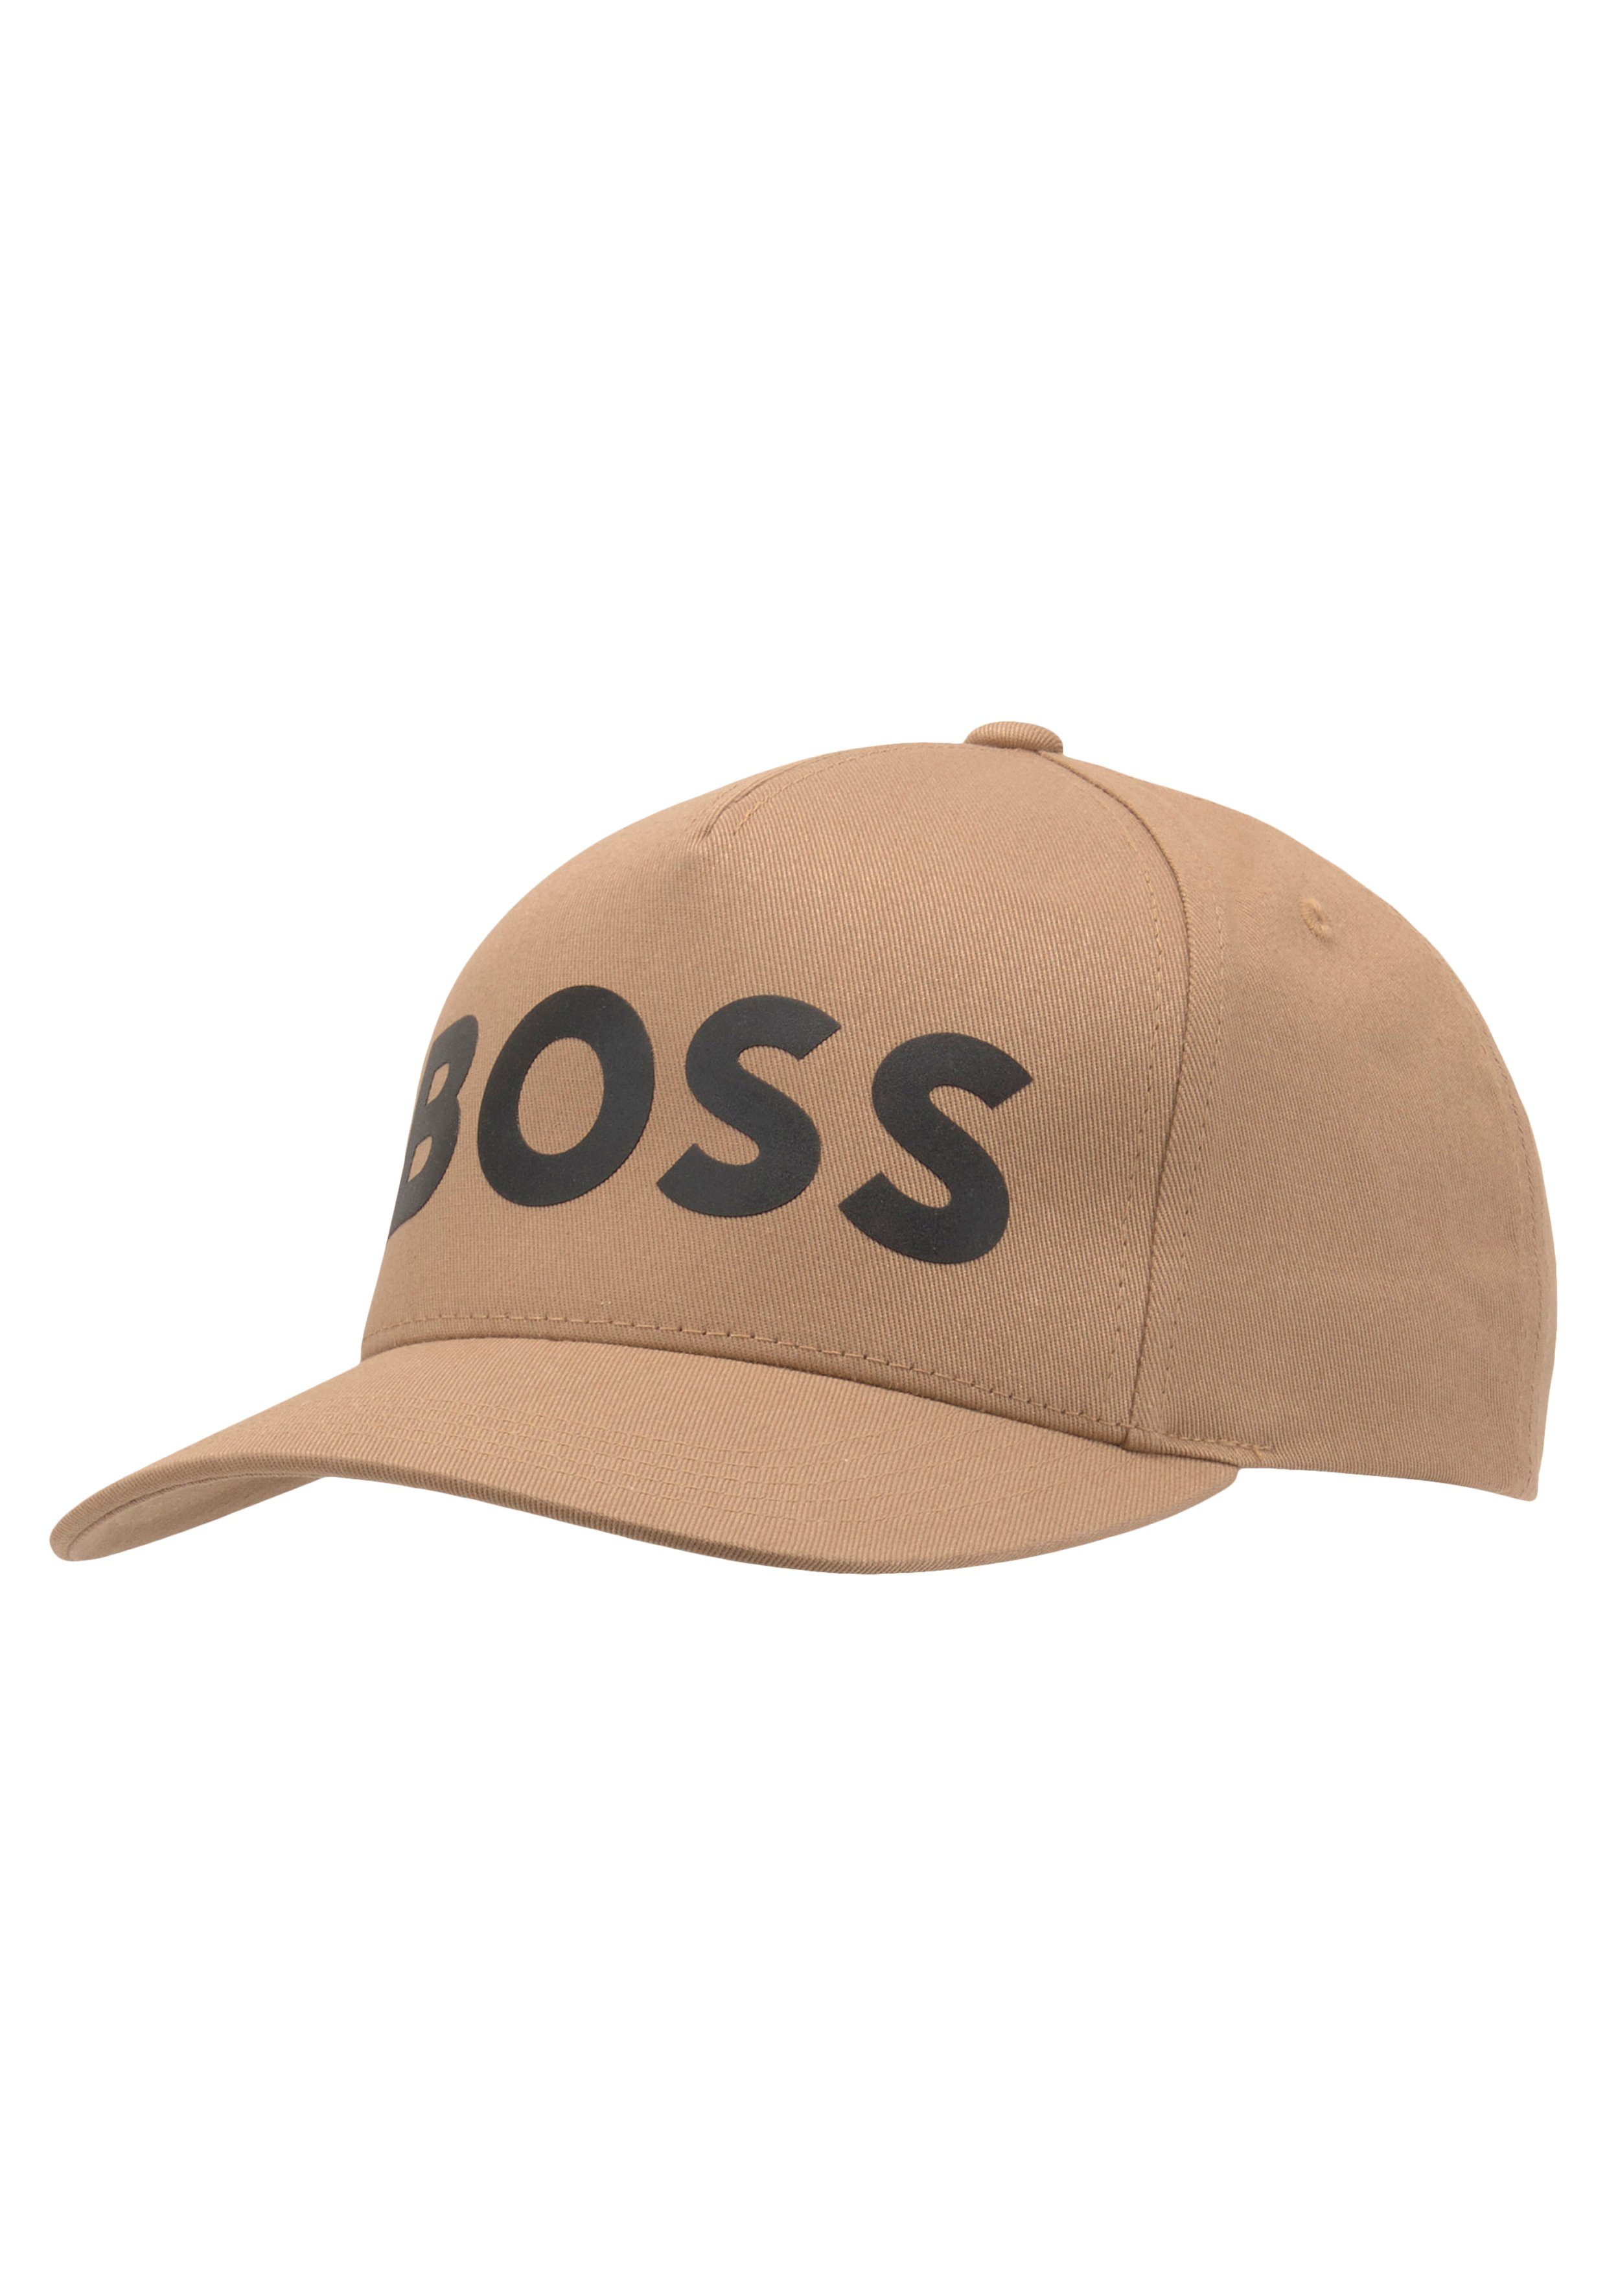 mit medium_beige BOSS Cap Baseball Logodruck Sevile-BOSS-5